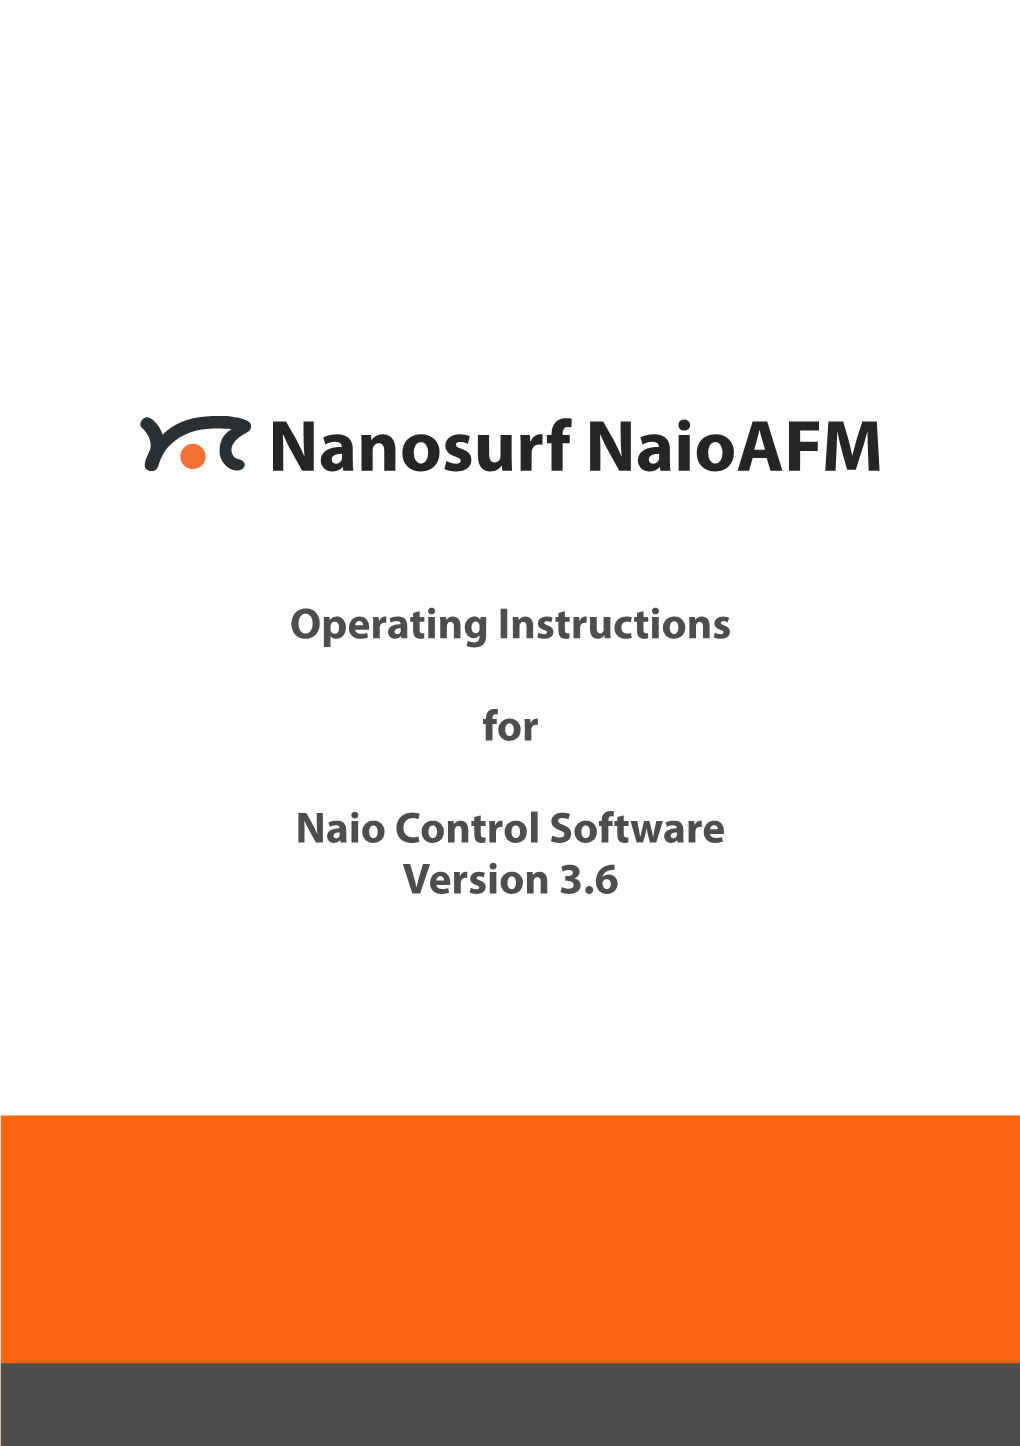 Nanosurf Operating Instructions (Naio).Book